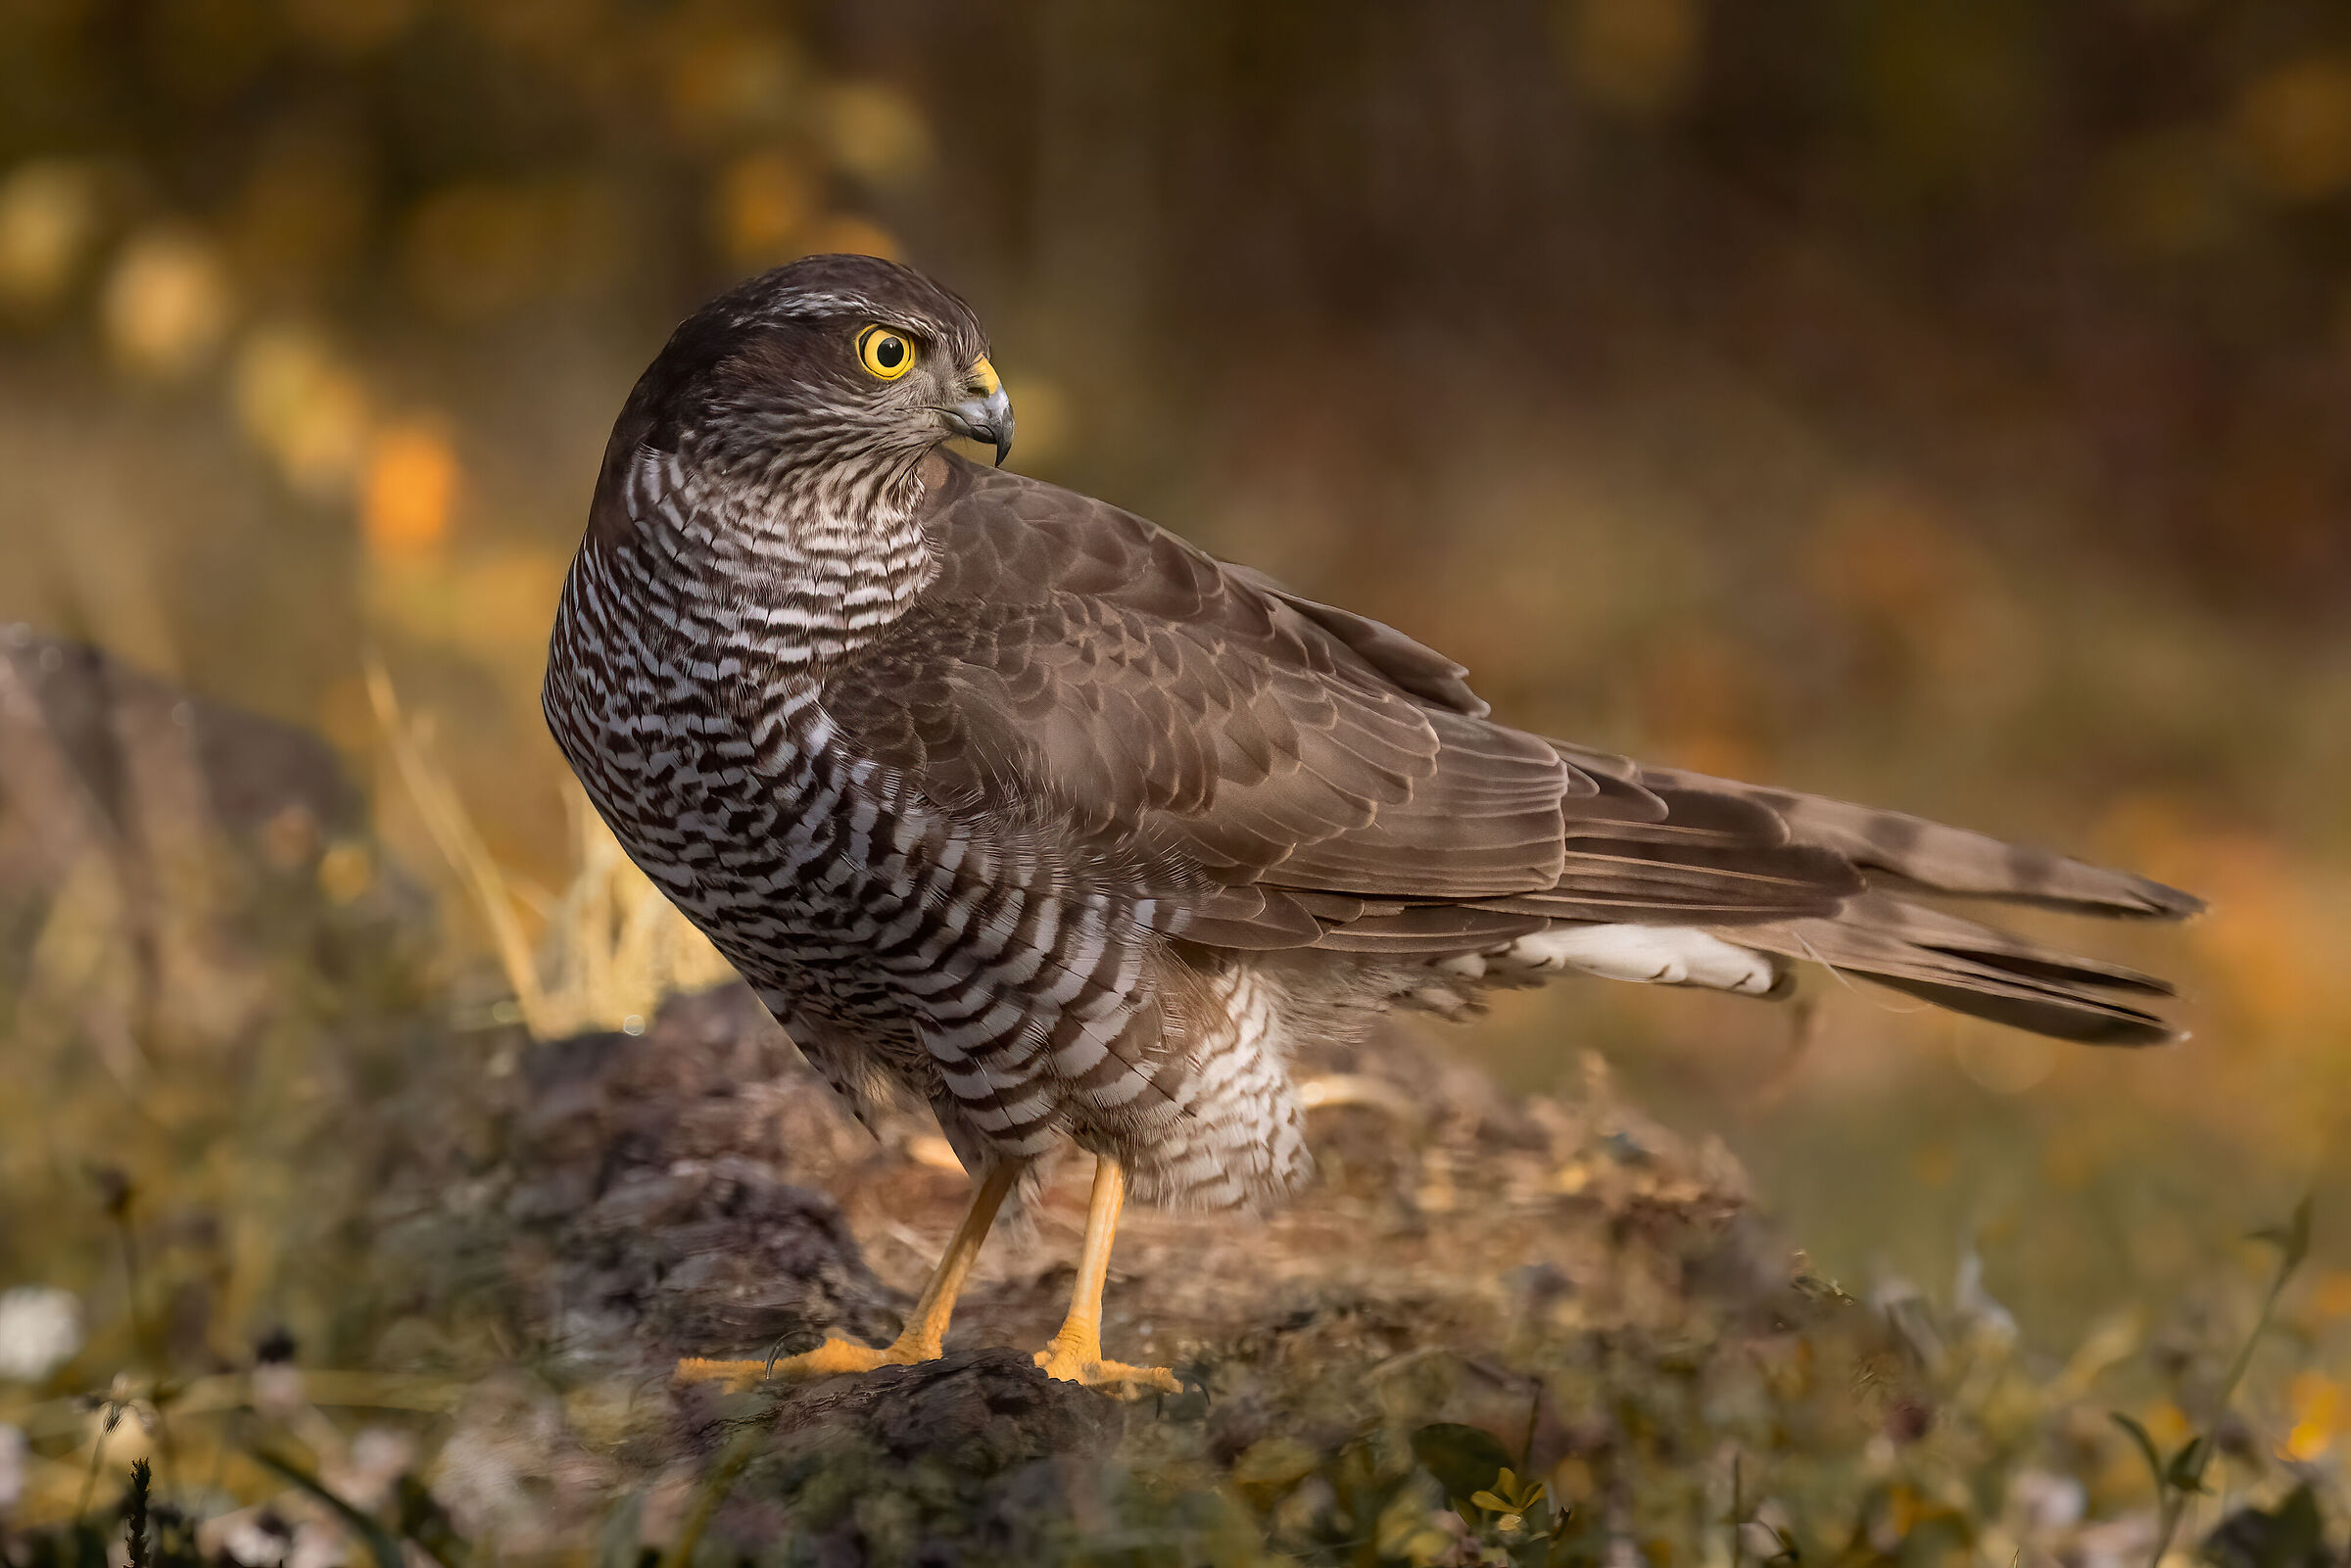 Sparrowhawk on autumn background - November 2021...